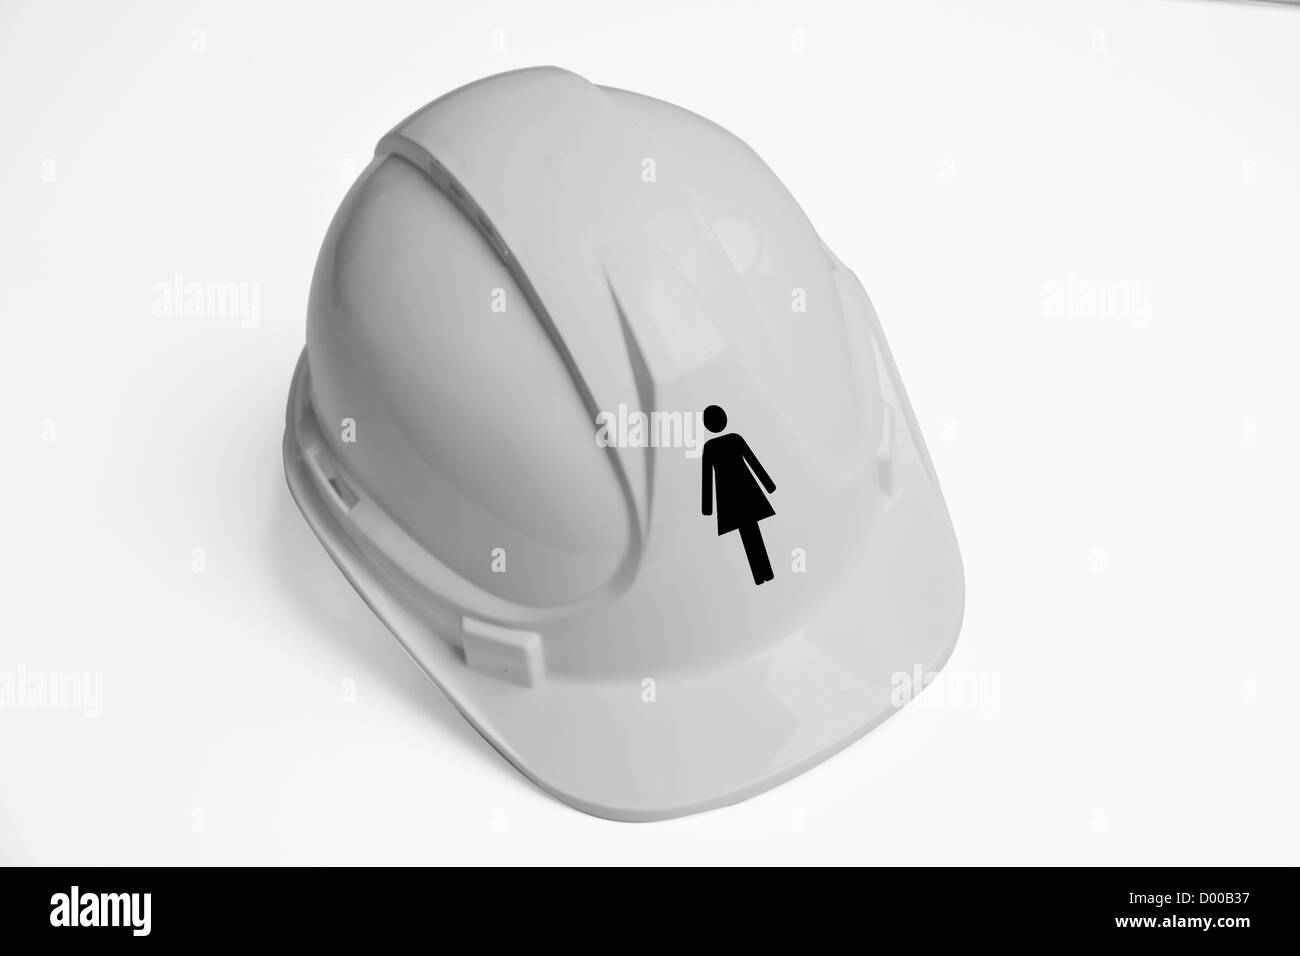 Women's symbol on hard hat against white background Stock Photo